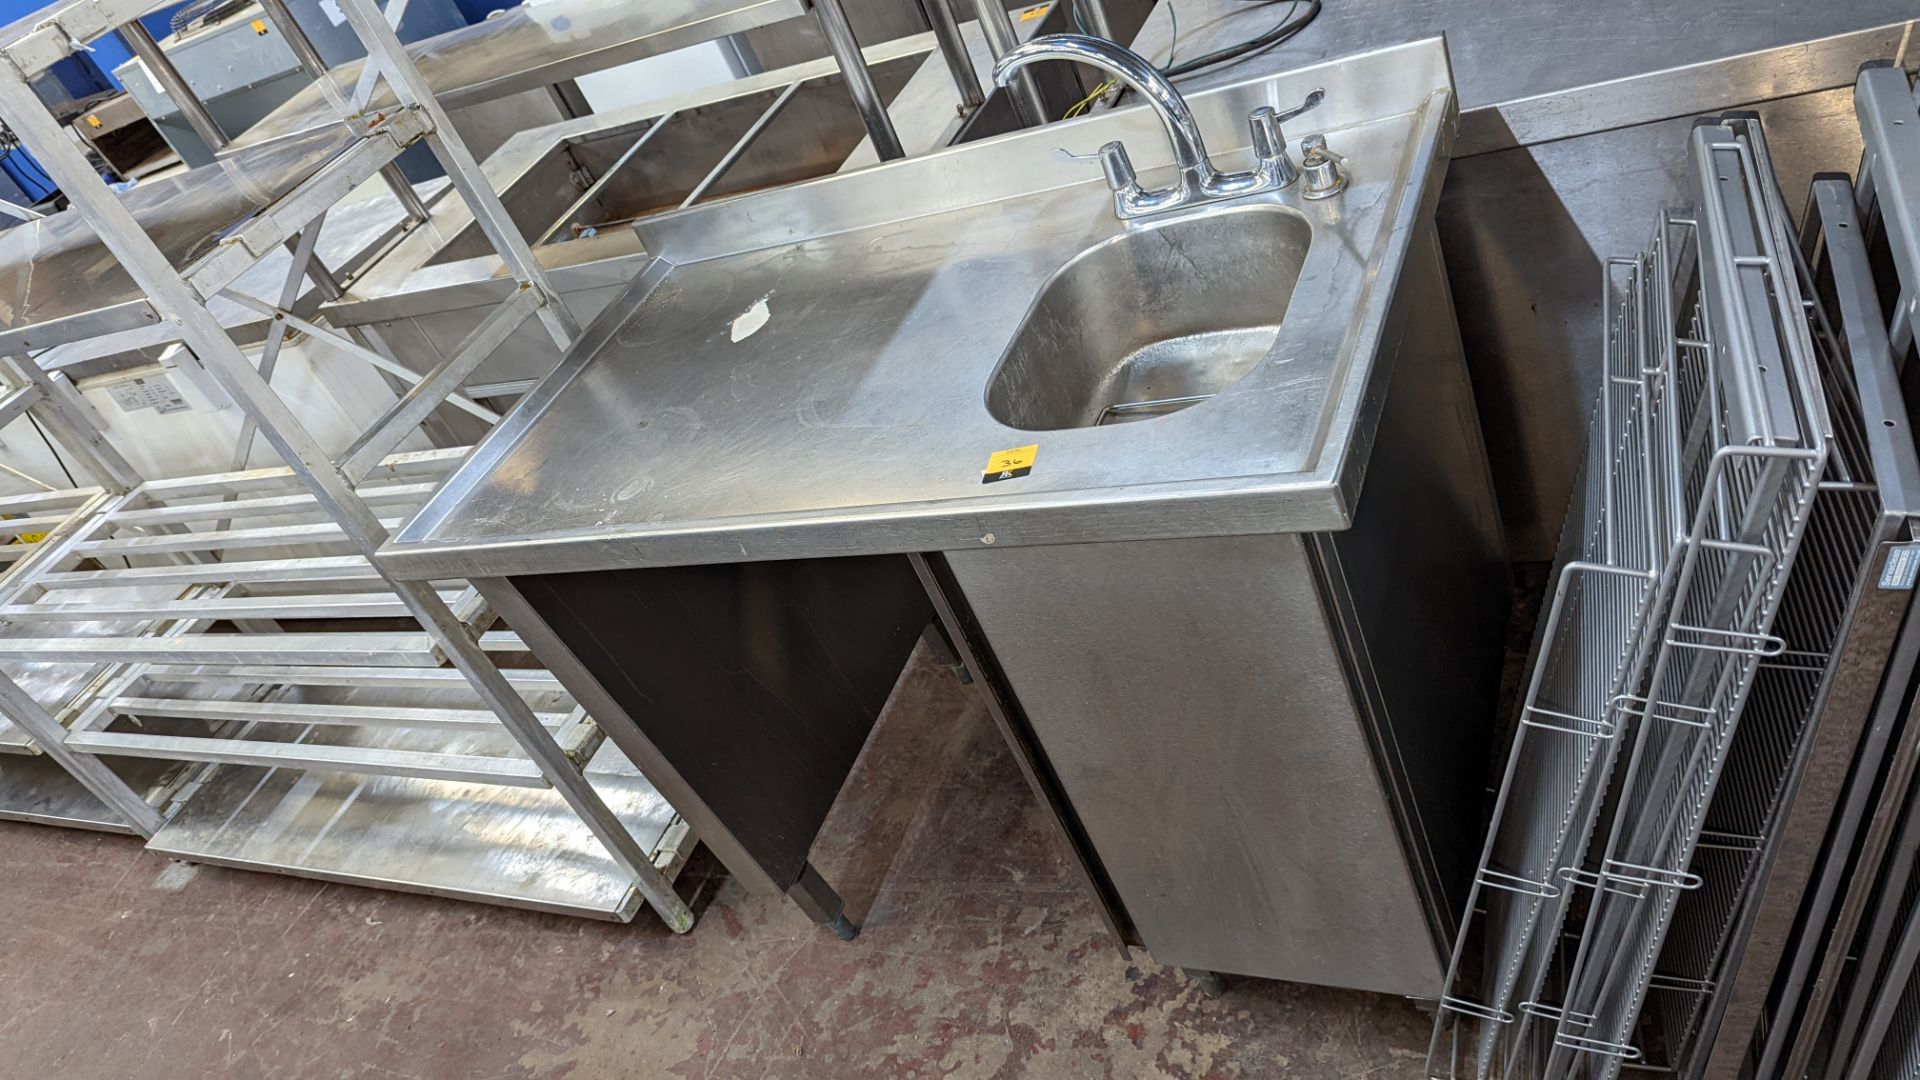 Stainless steel freestanding sink & drainer arrangement including storage below - Image 2 of 5